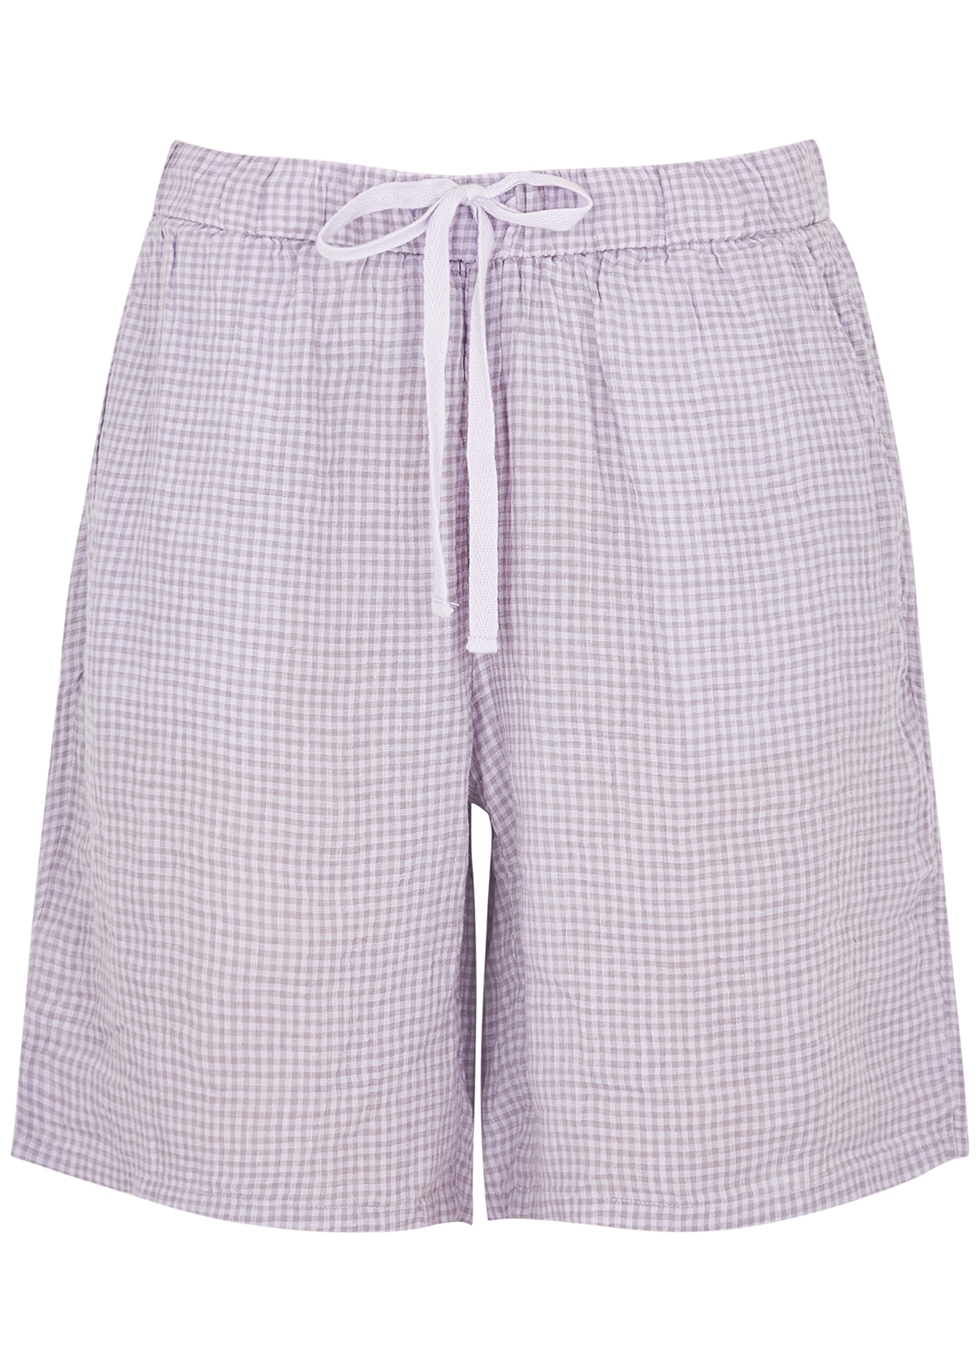 EILEEN FISHER Lilac gingham linen shorts - Harvey Nichols